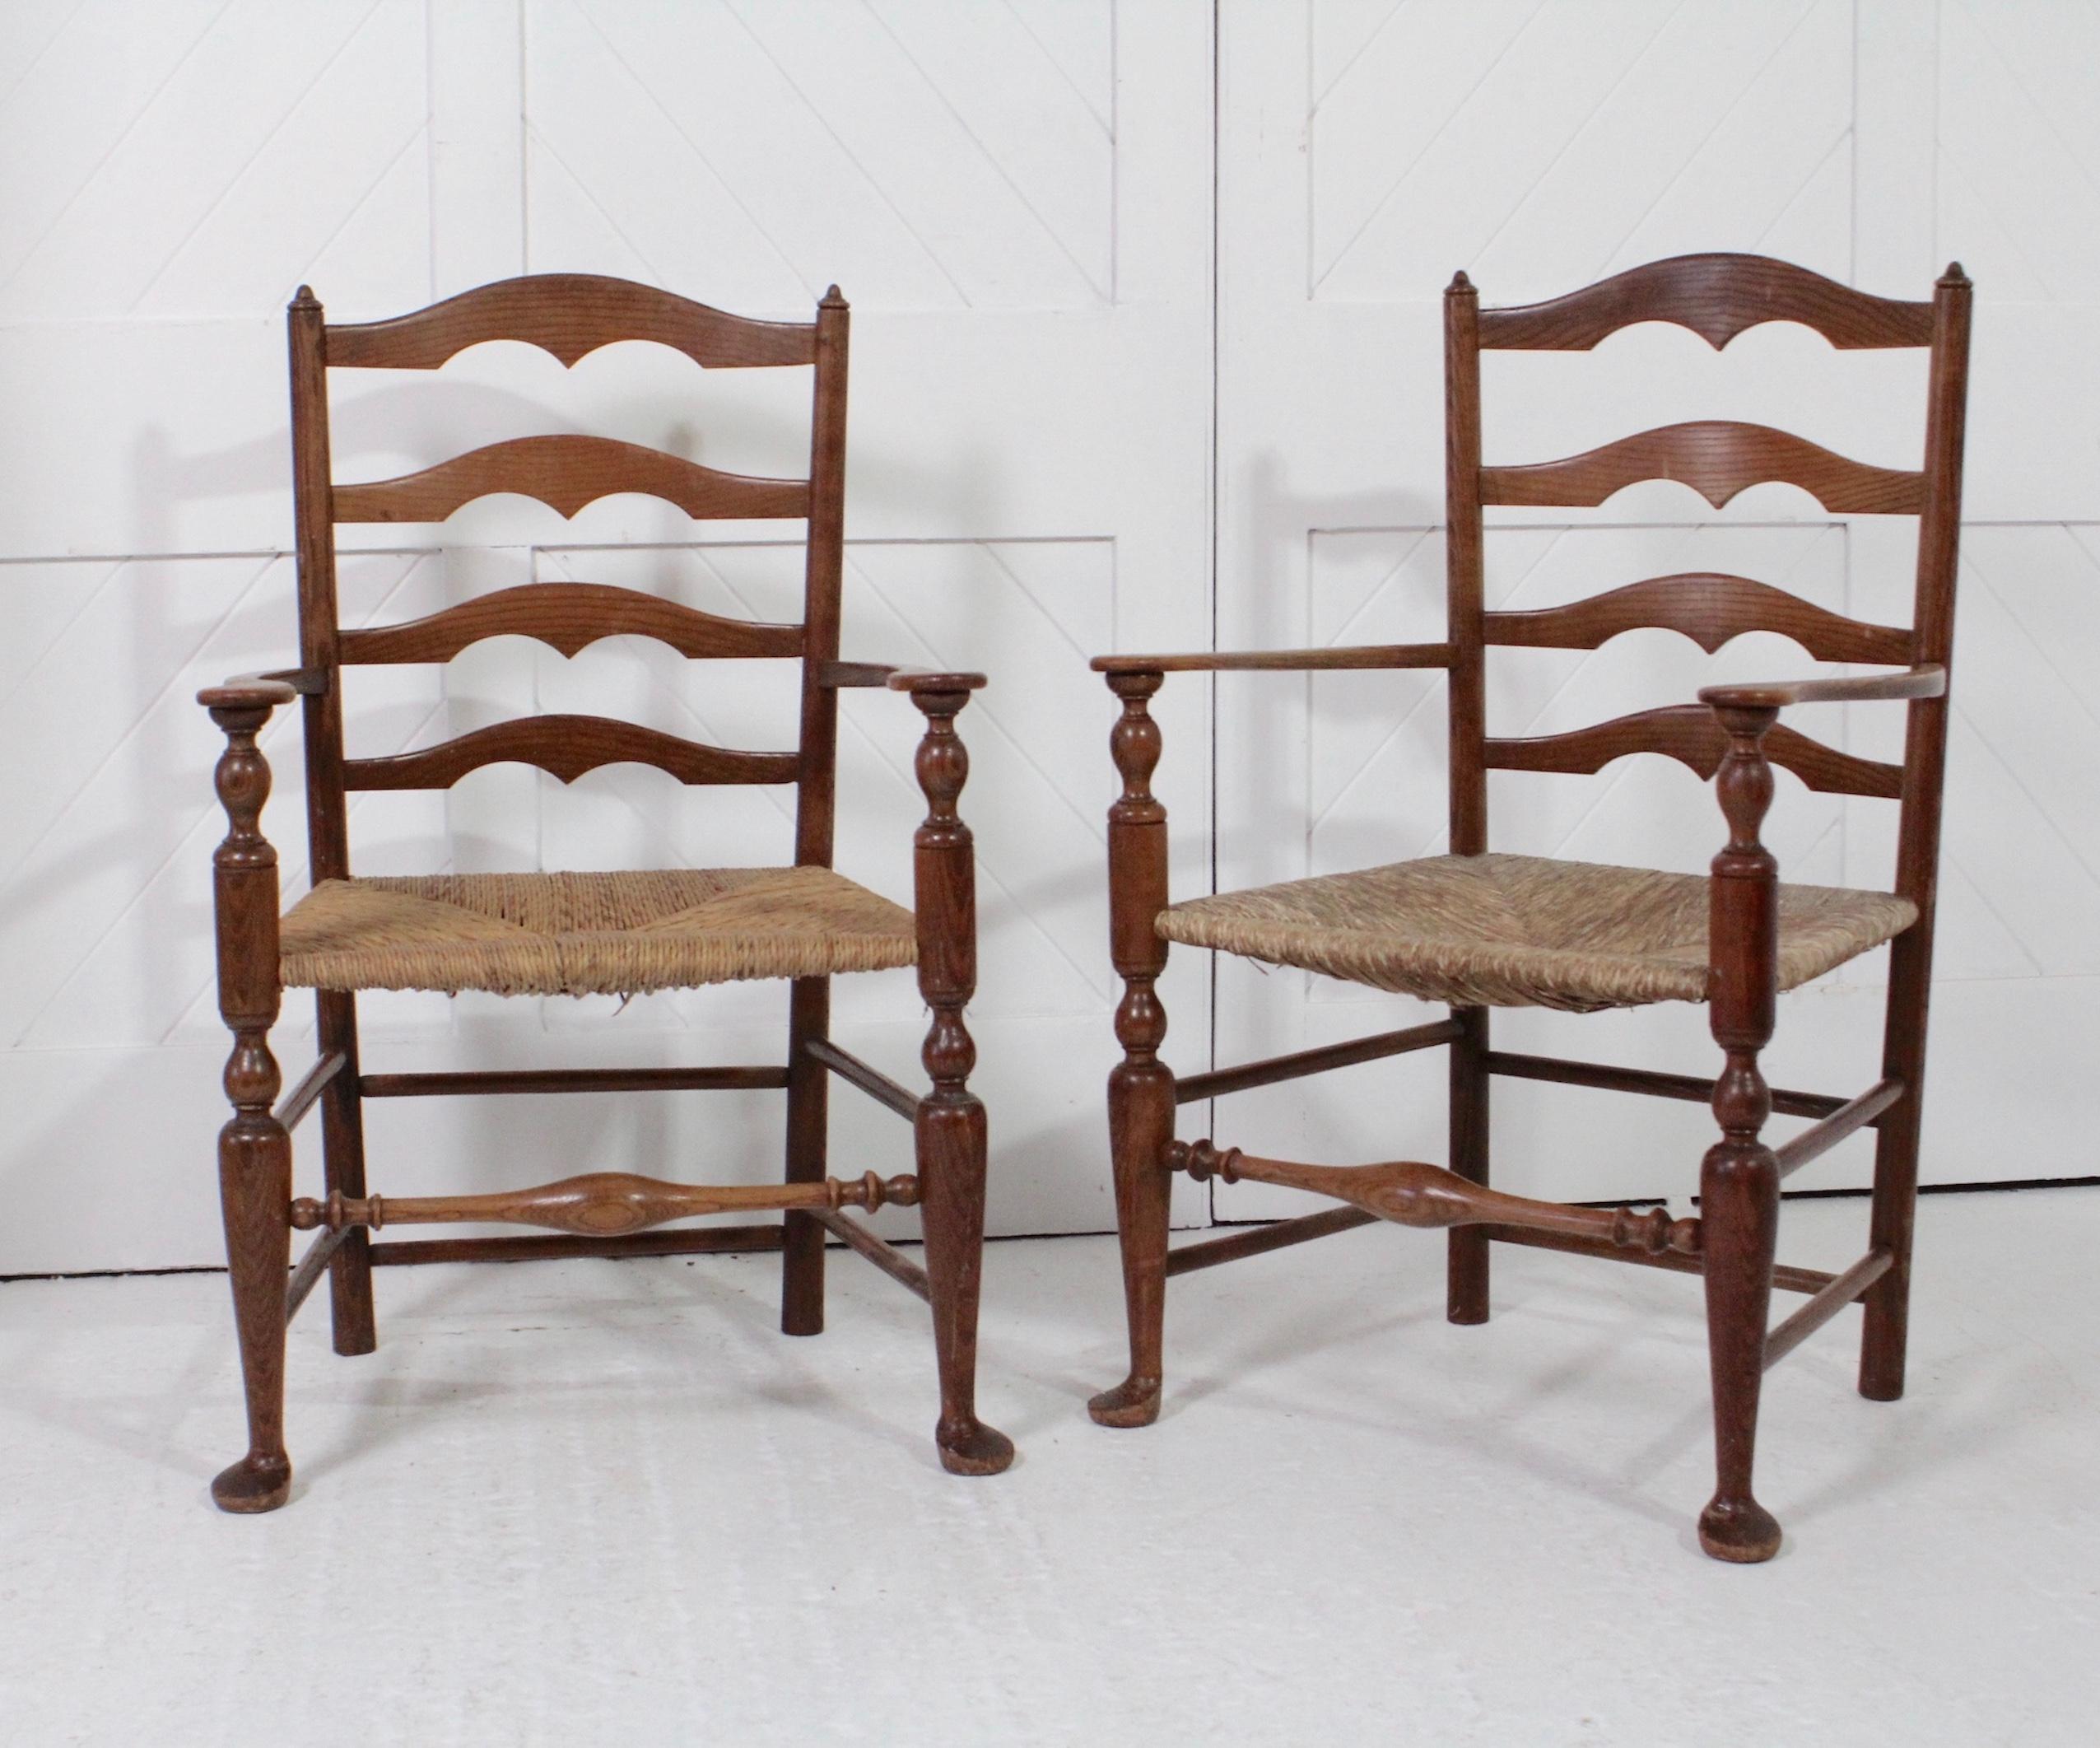 Arts & Crafts rare pair of ladder back oak armchairs
With rush seats
By Sir Edwin Landseer Lutyens
Circa 1902

Height 98cm Width 61cm Depth 50cm

